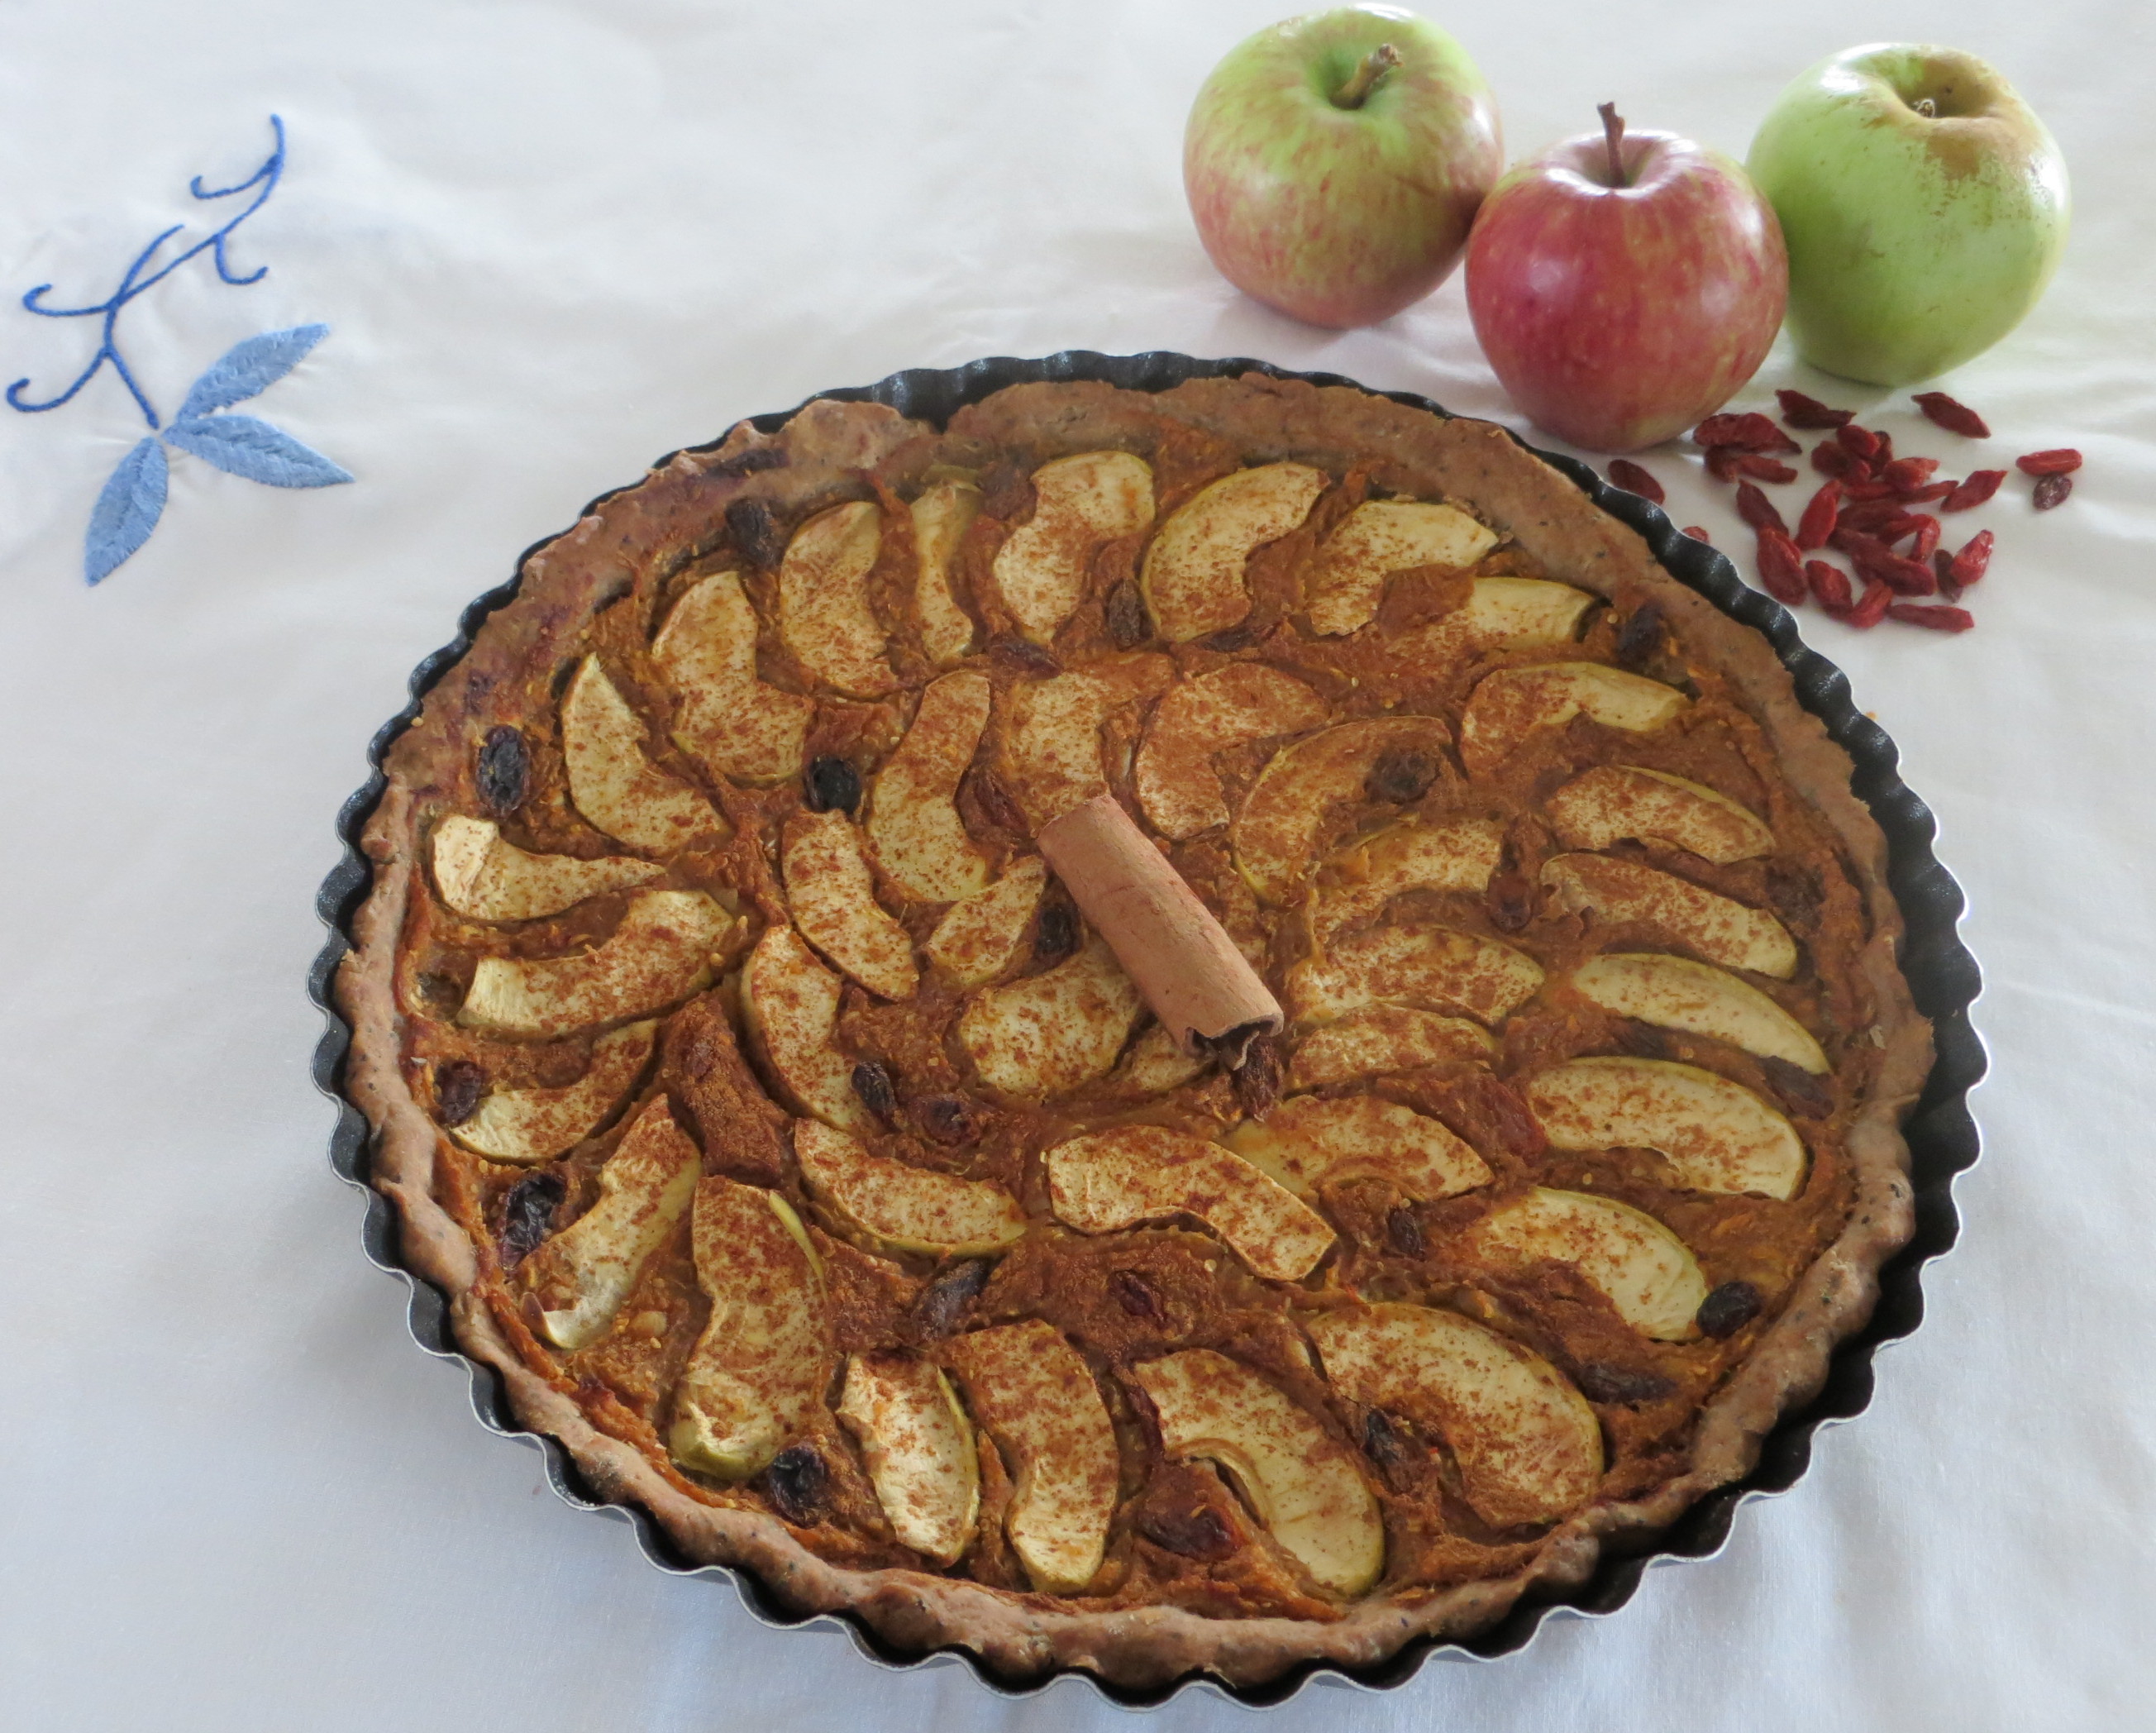 Apple and gojis pie 